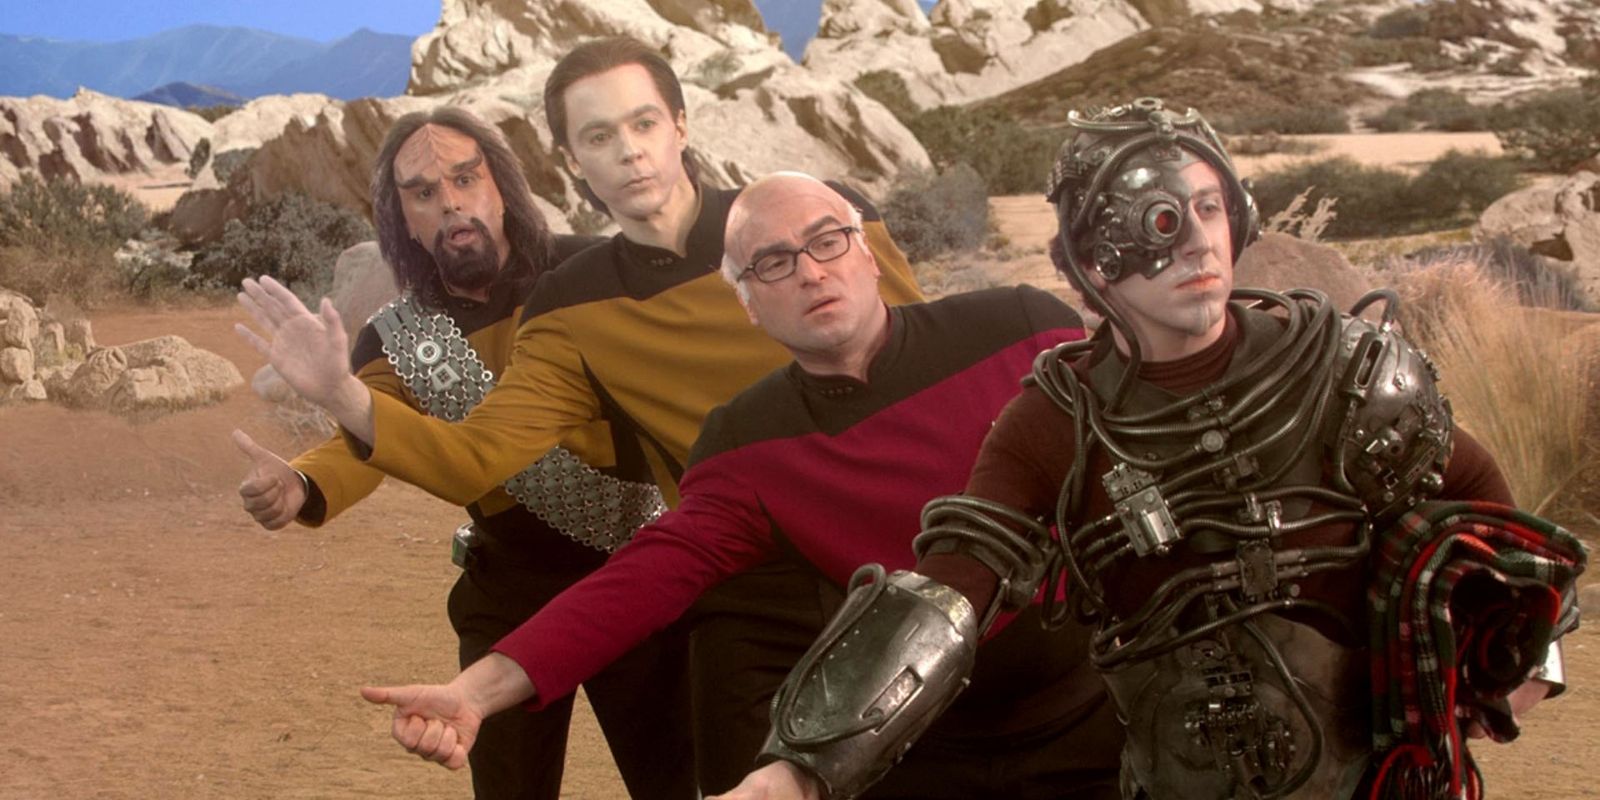 The Big Bang Theory Guys Star Trek Costumes